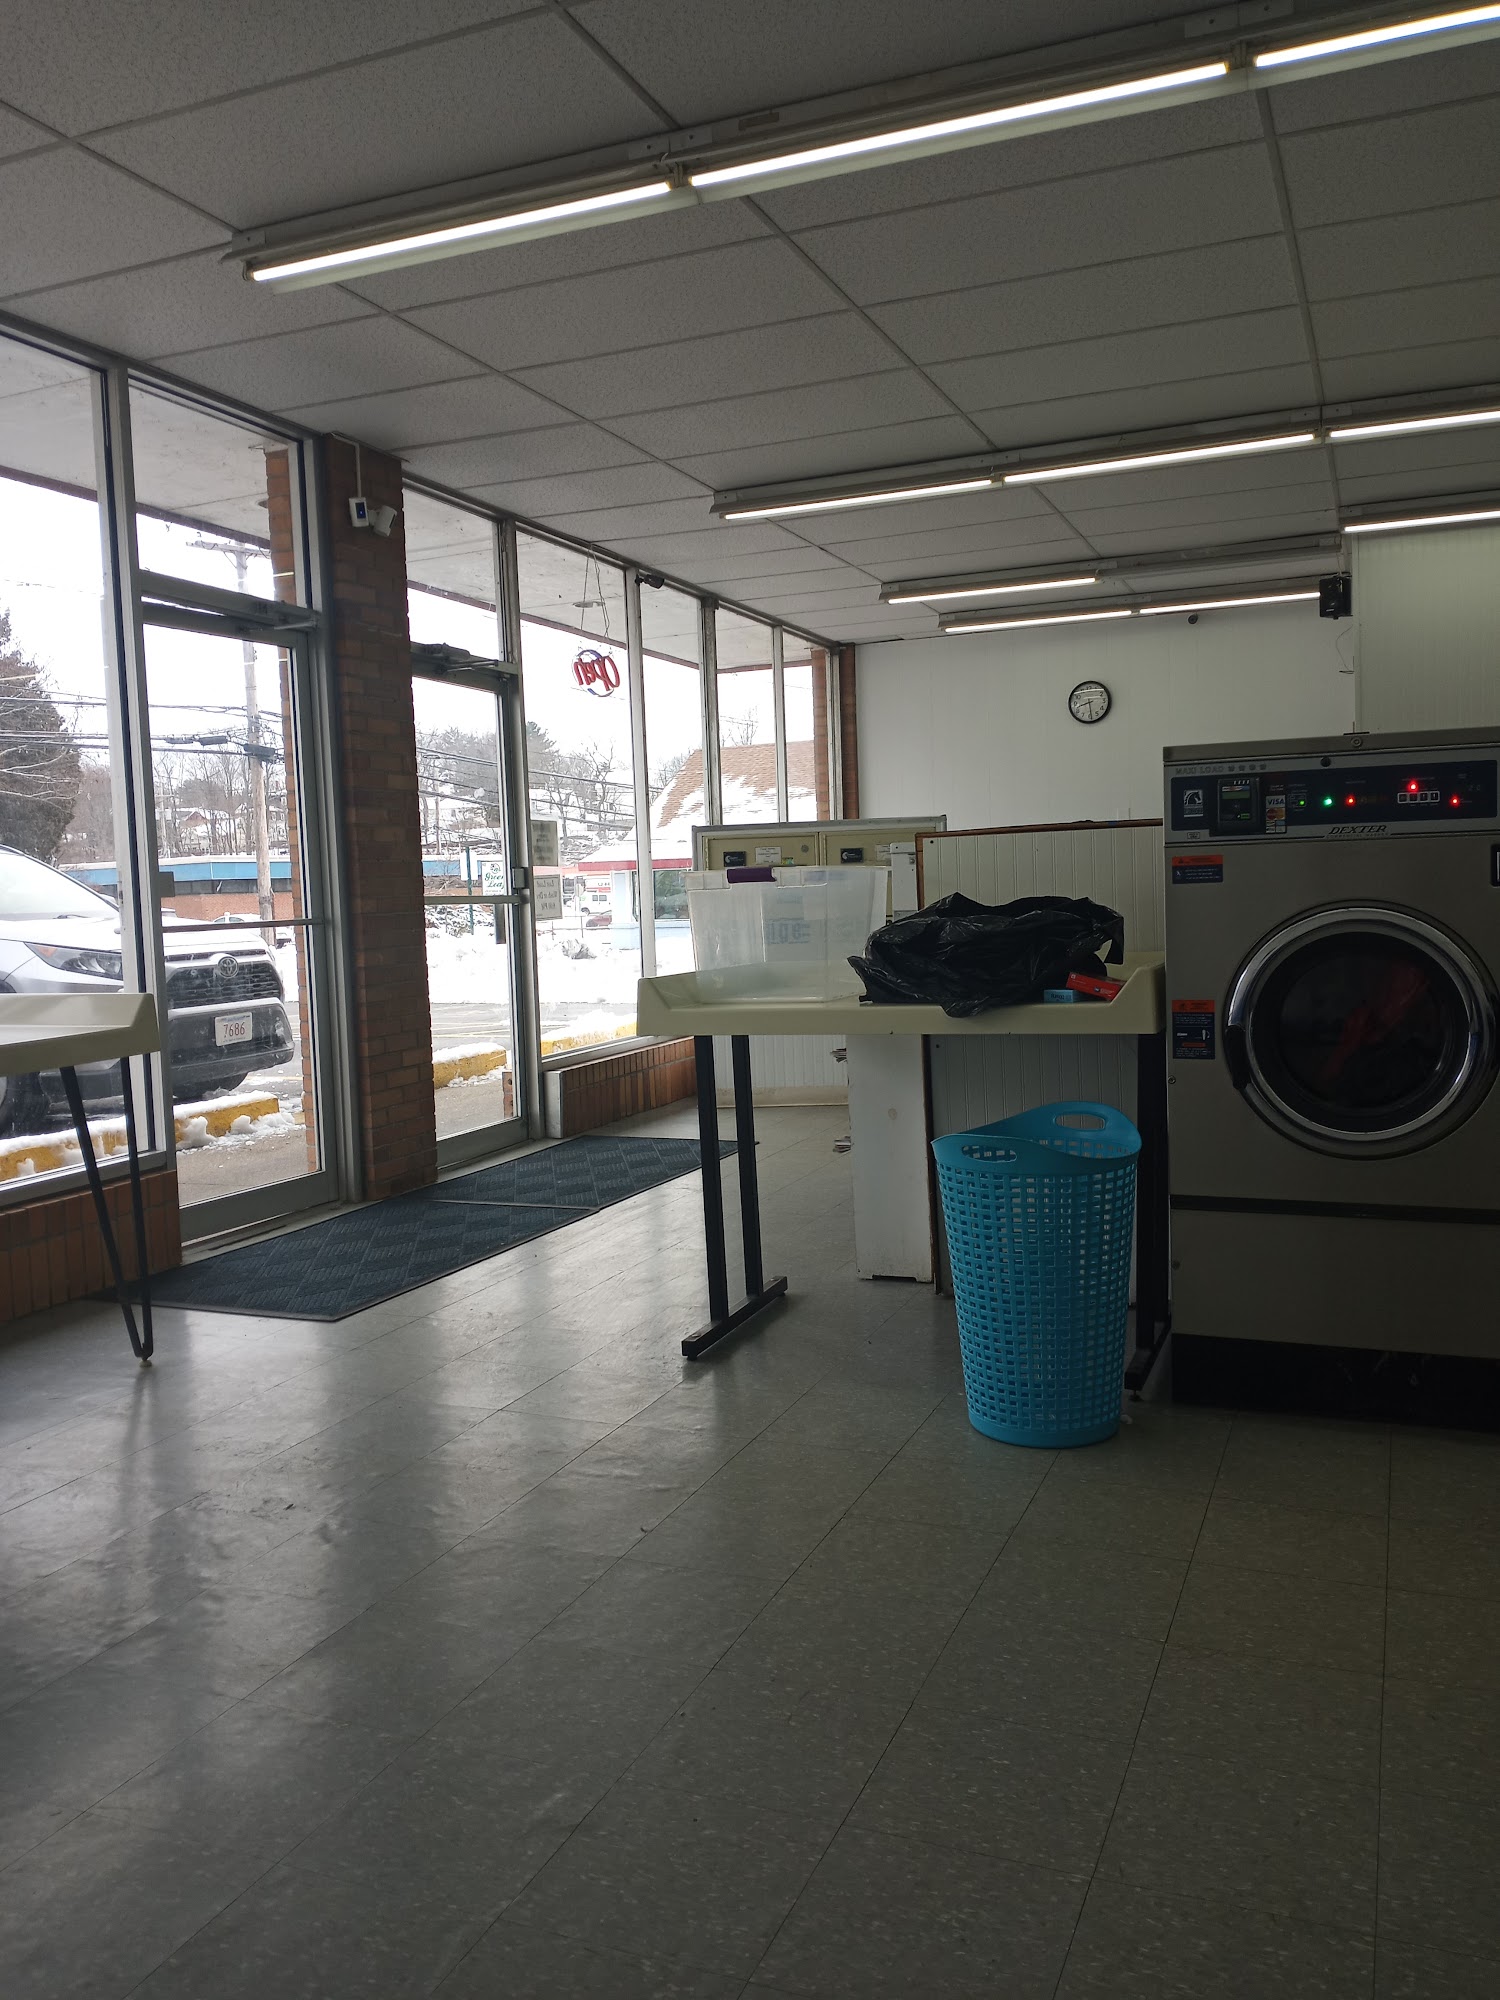 Saxon CoinOp LaundryMat